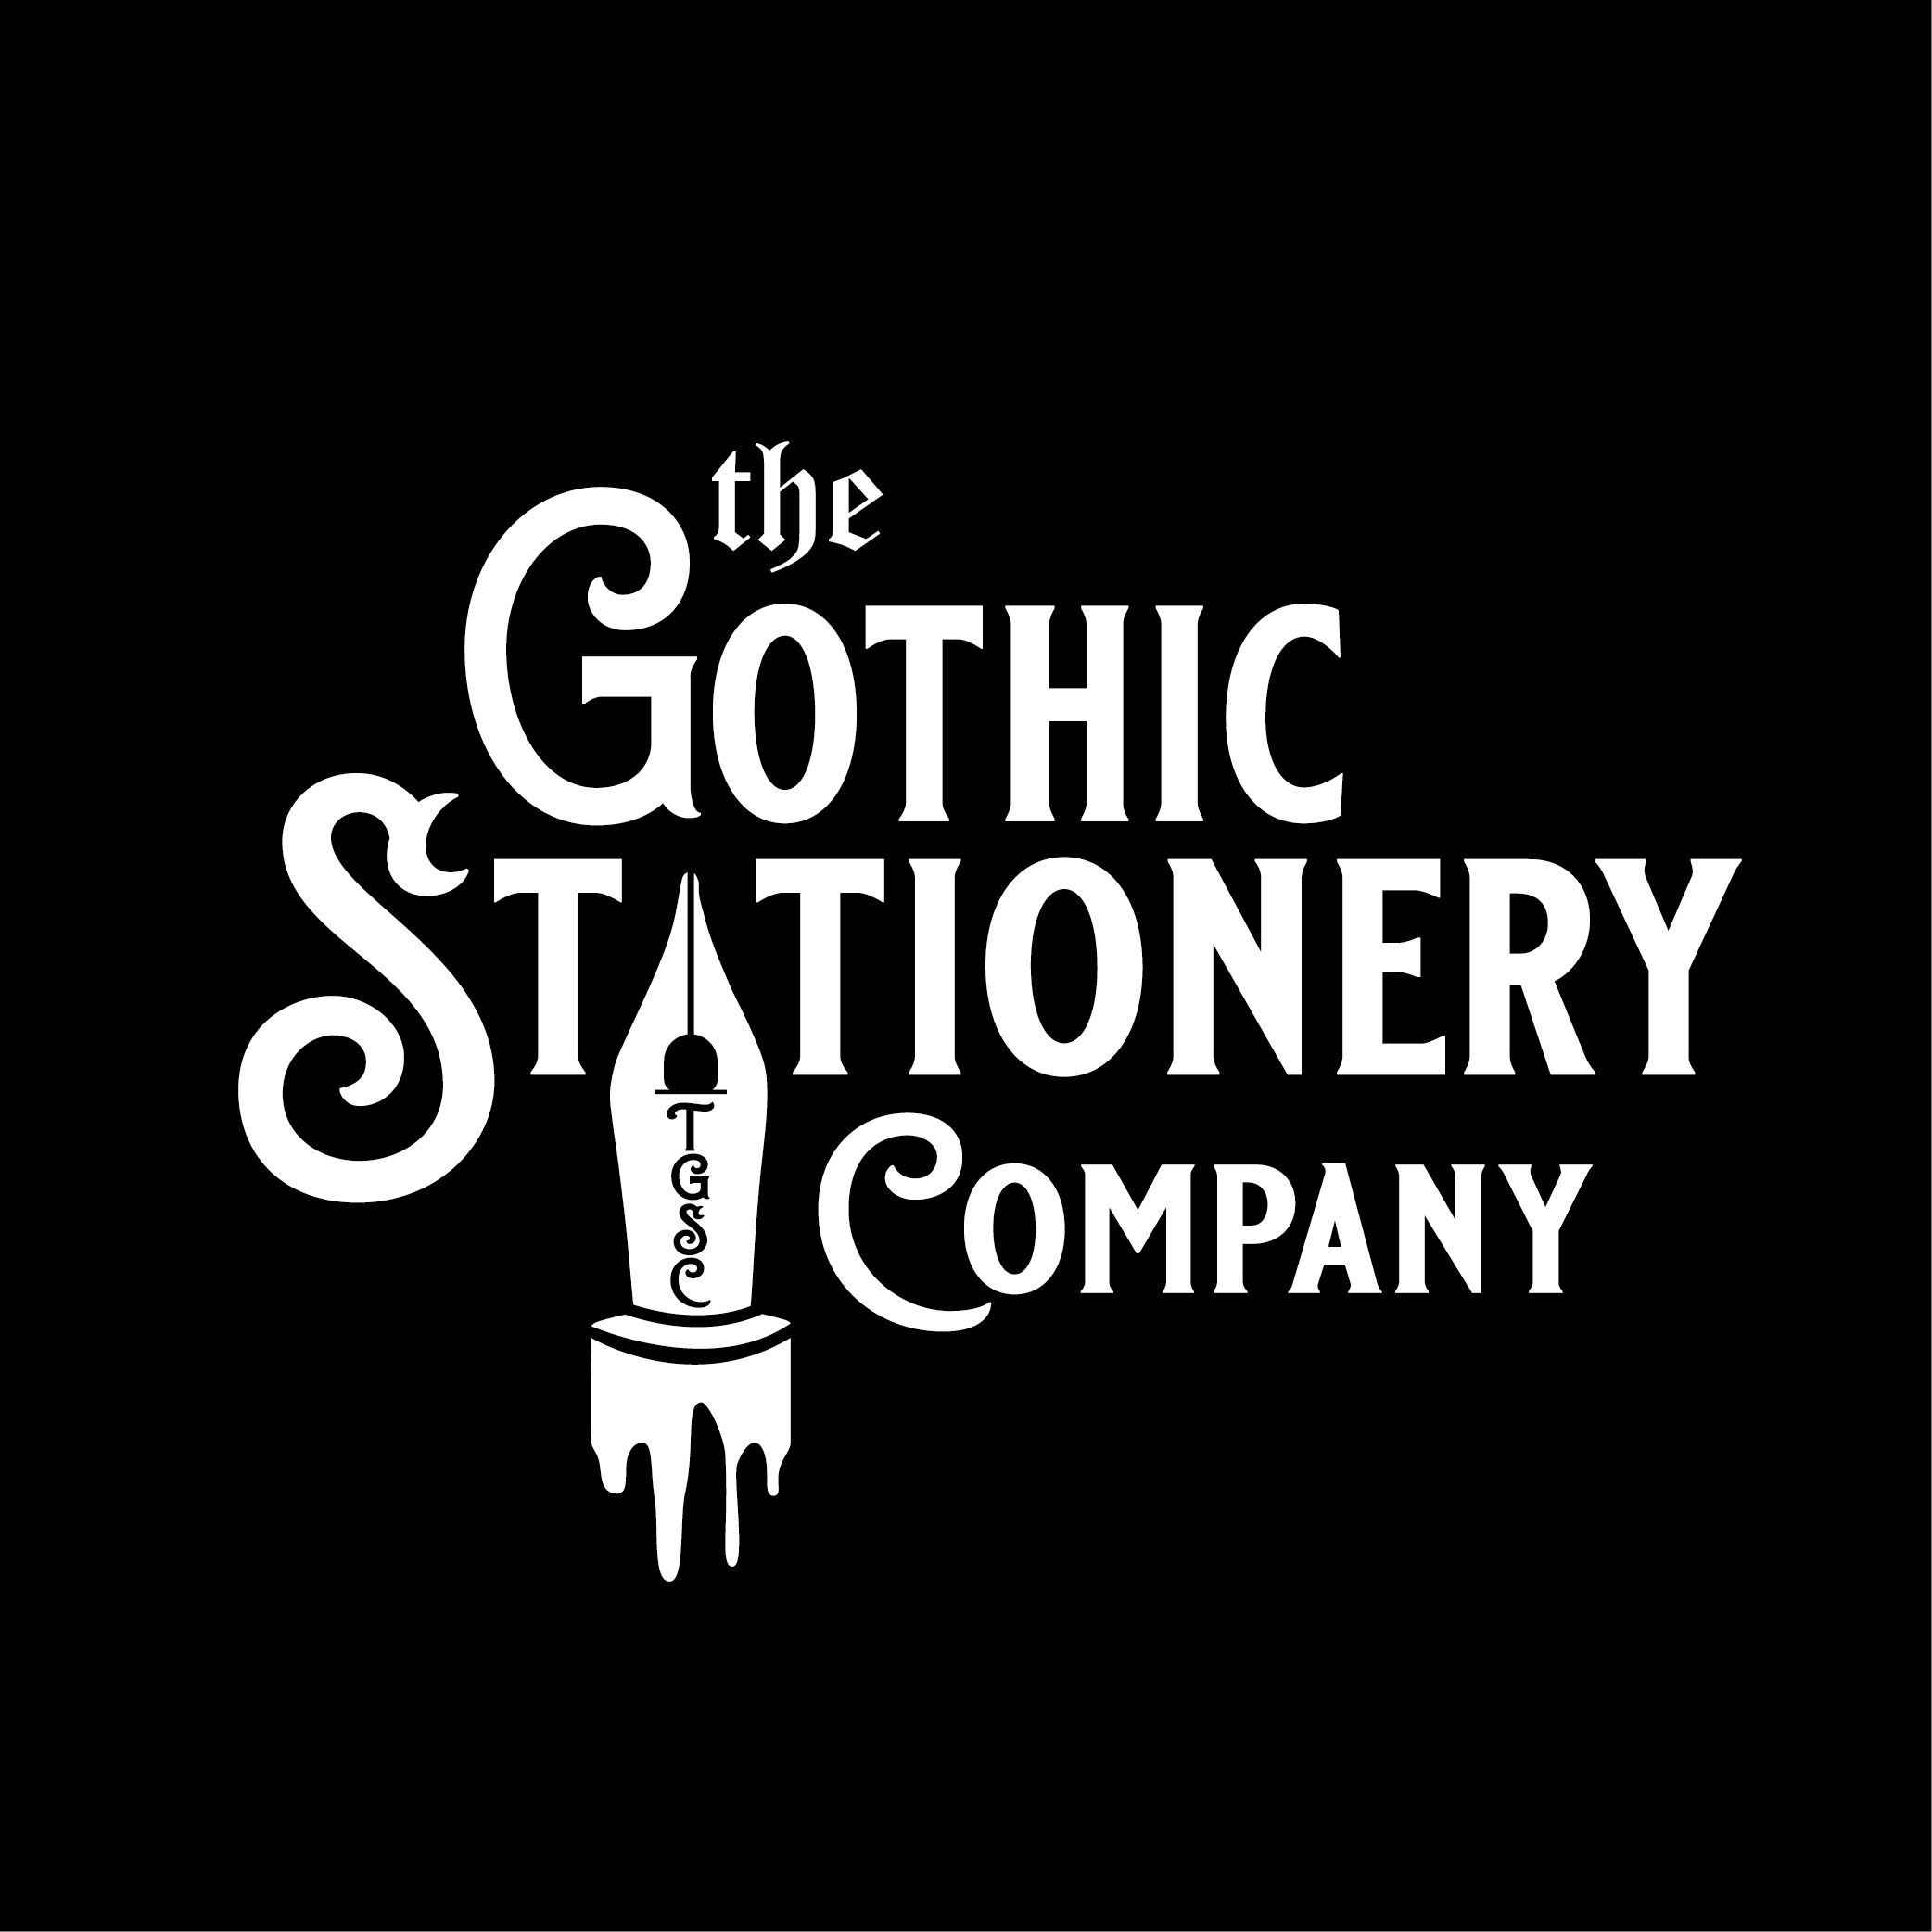 The Gothic Stationery Company